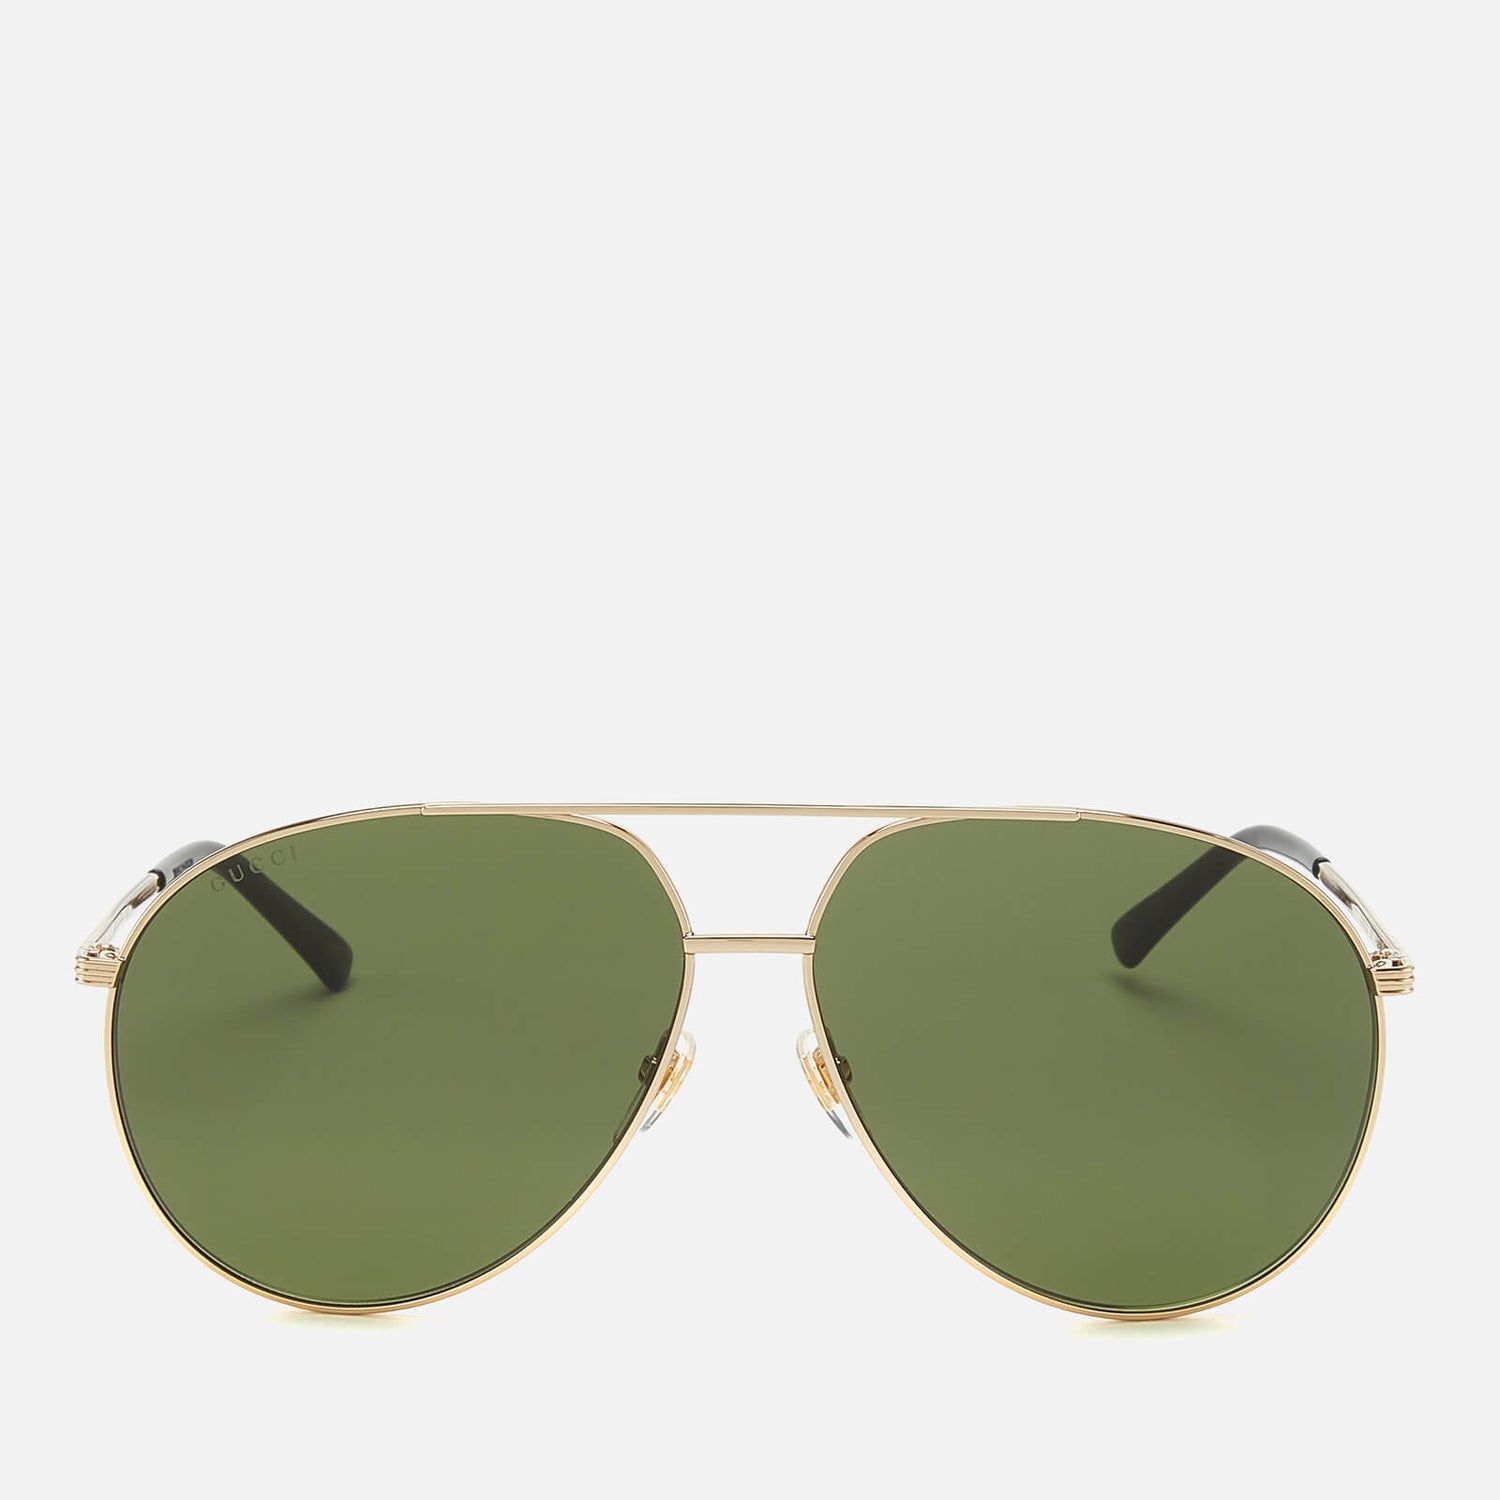 Gucci Men's Metal Frame Sunglasses - Shiny Endura Gold